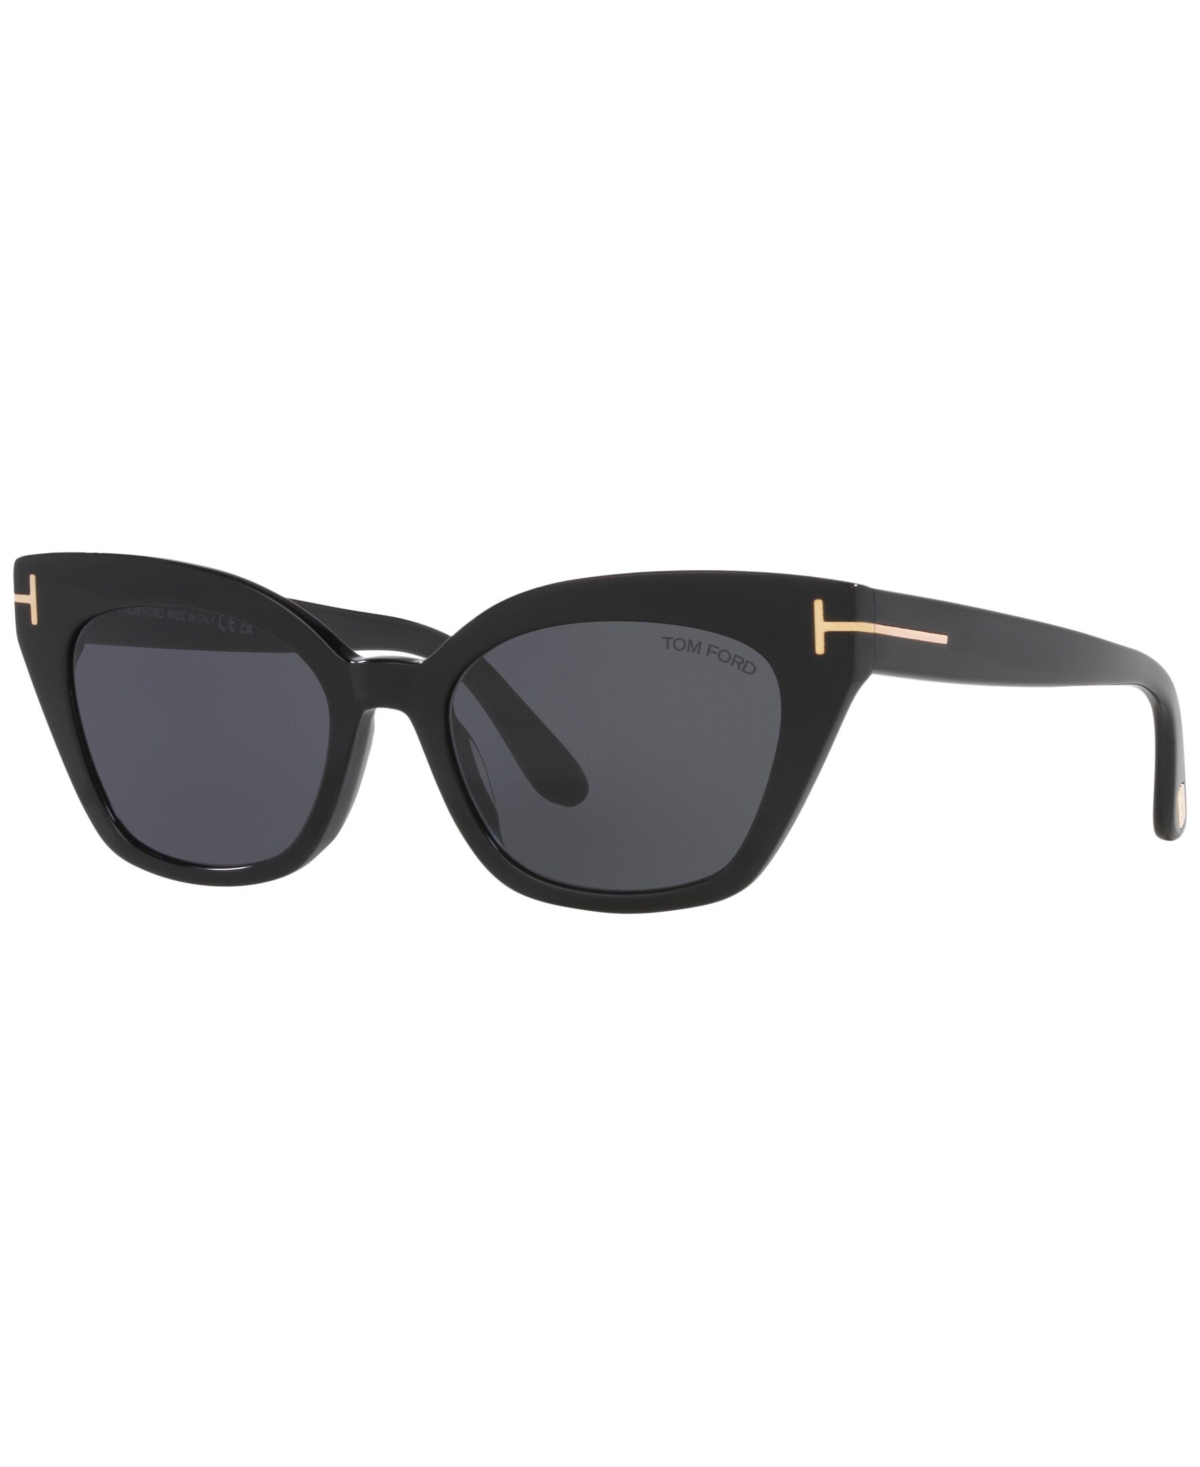 Tom Ford Women's Sunglasses, Juliette In Shiny Black